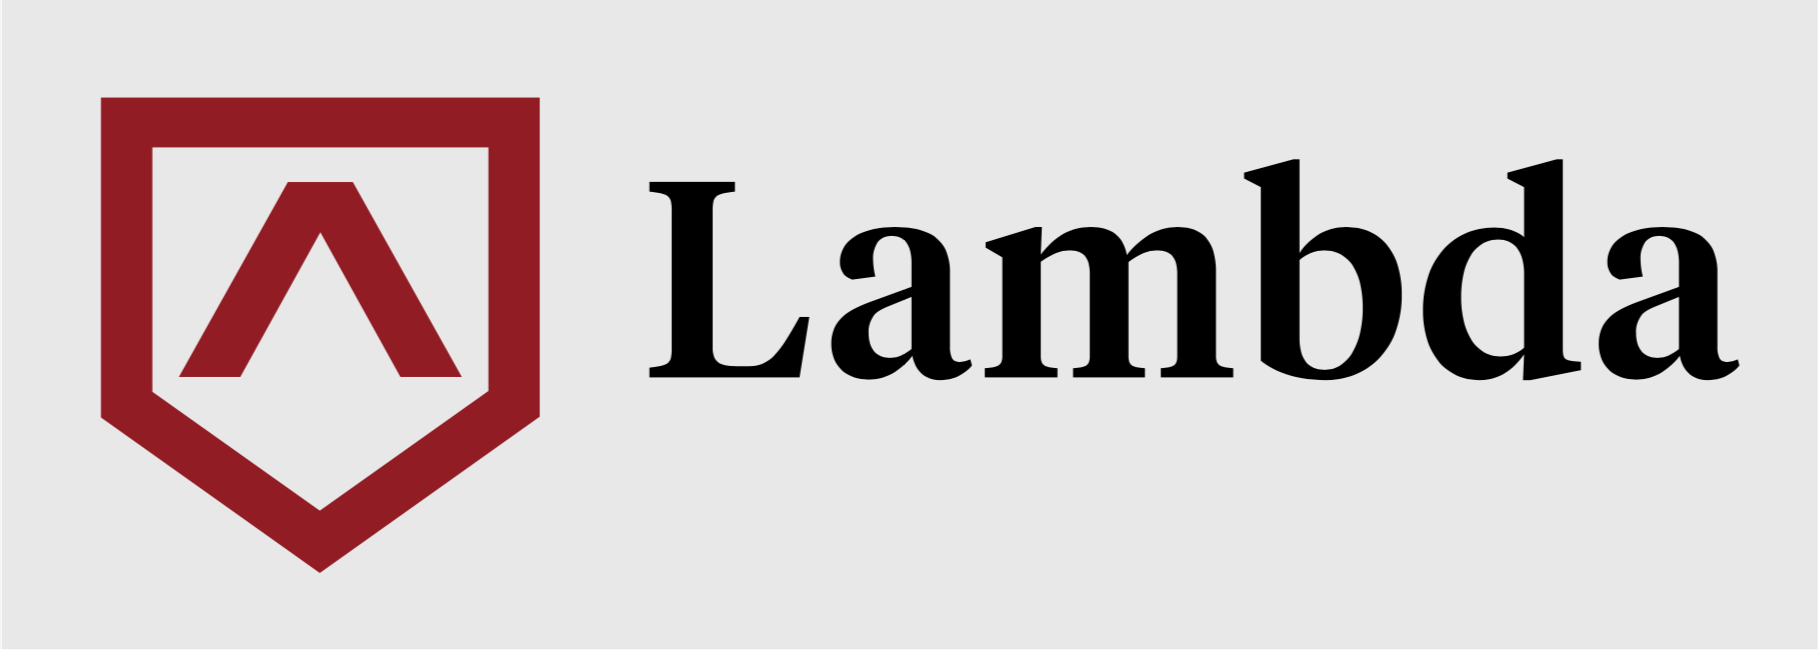 Why Lambda School?